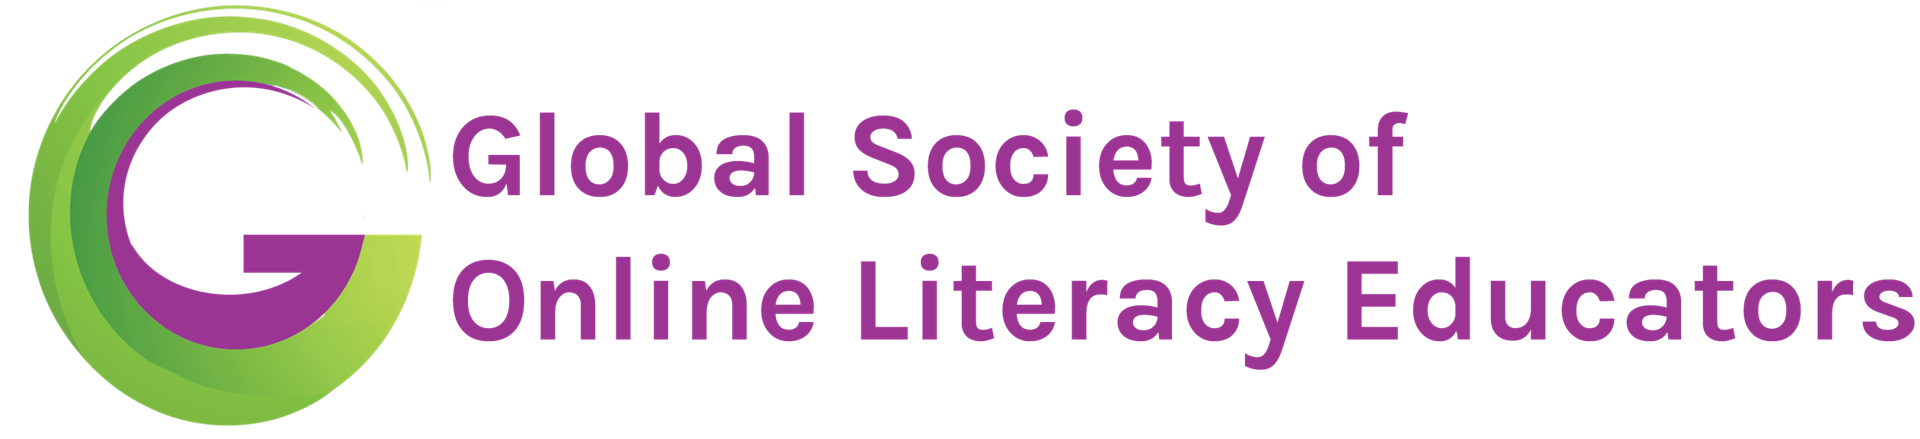 Global Society of Online Literacy Educators